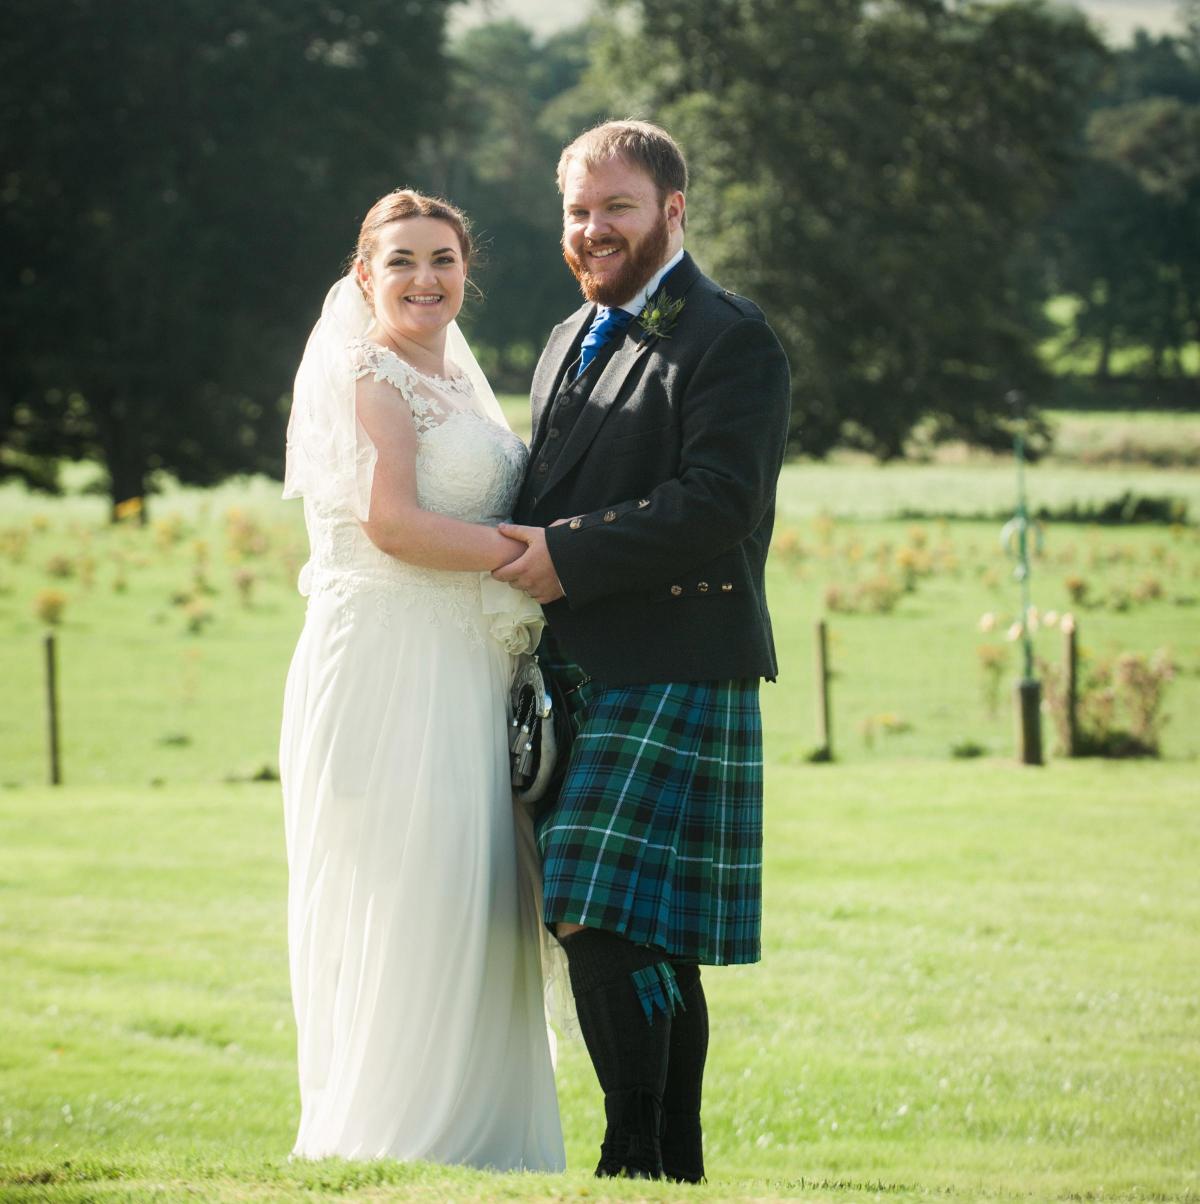 Jean Forrest of Westertown Farm, Lanark, and Colin McLuckie, of Loanhead, Edinburgh, were married at Cairngryffe Church, Carmichael, Biggar  Photo: Soraya Photography